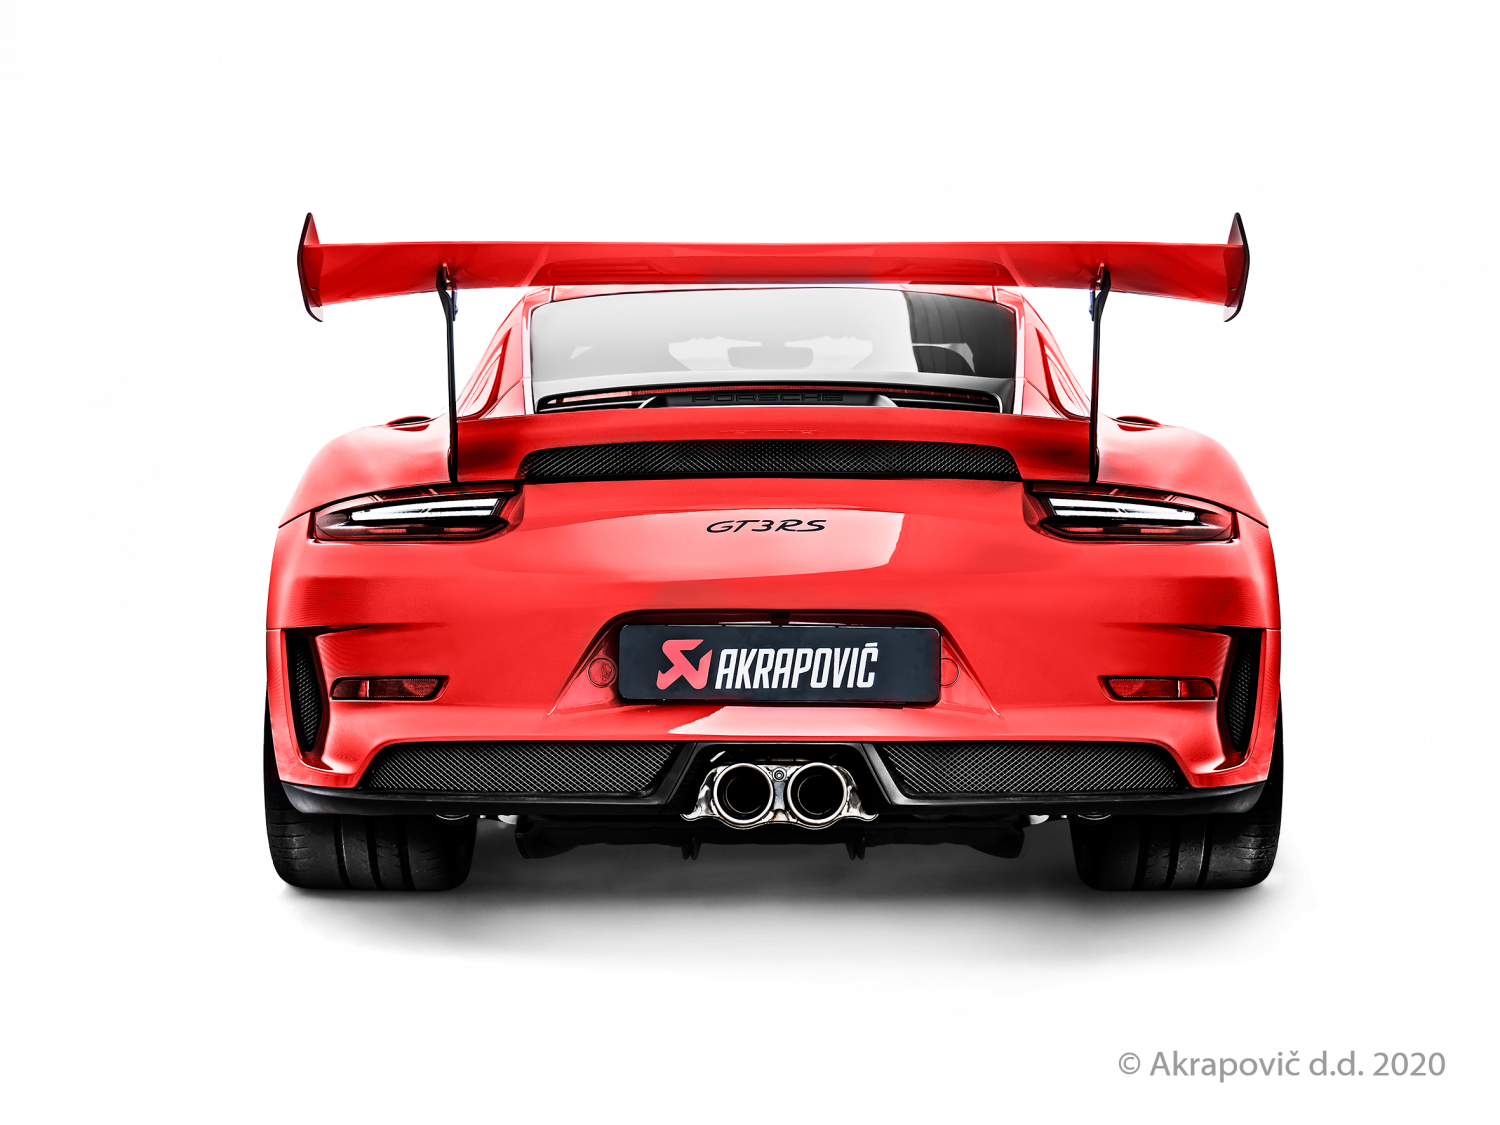 Výfuk Slip-On Line (titan) pro Porsche 911 GT3 (991.2);911 GT3 / GT3 Touring (991.2) 2019 